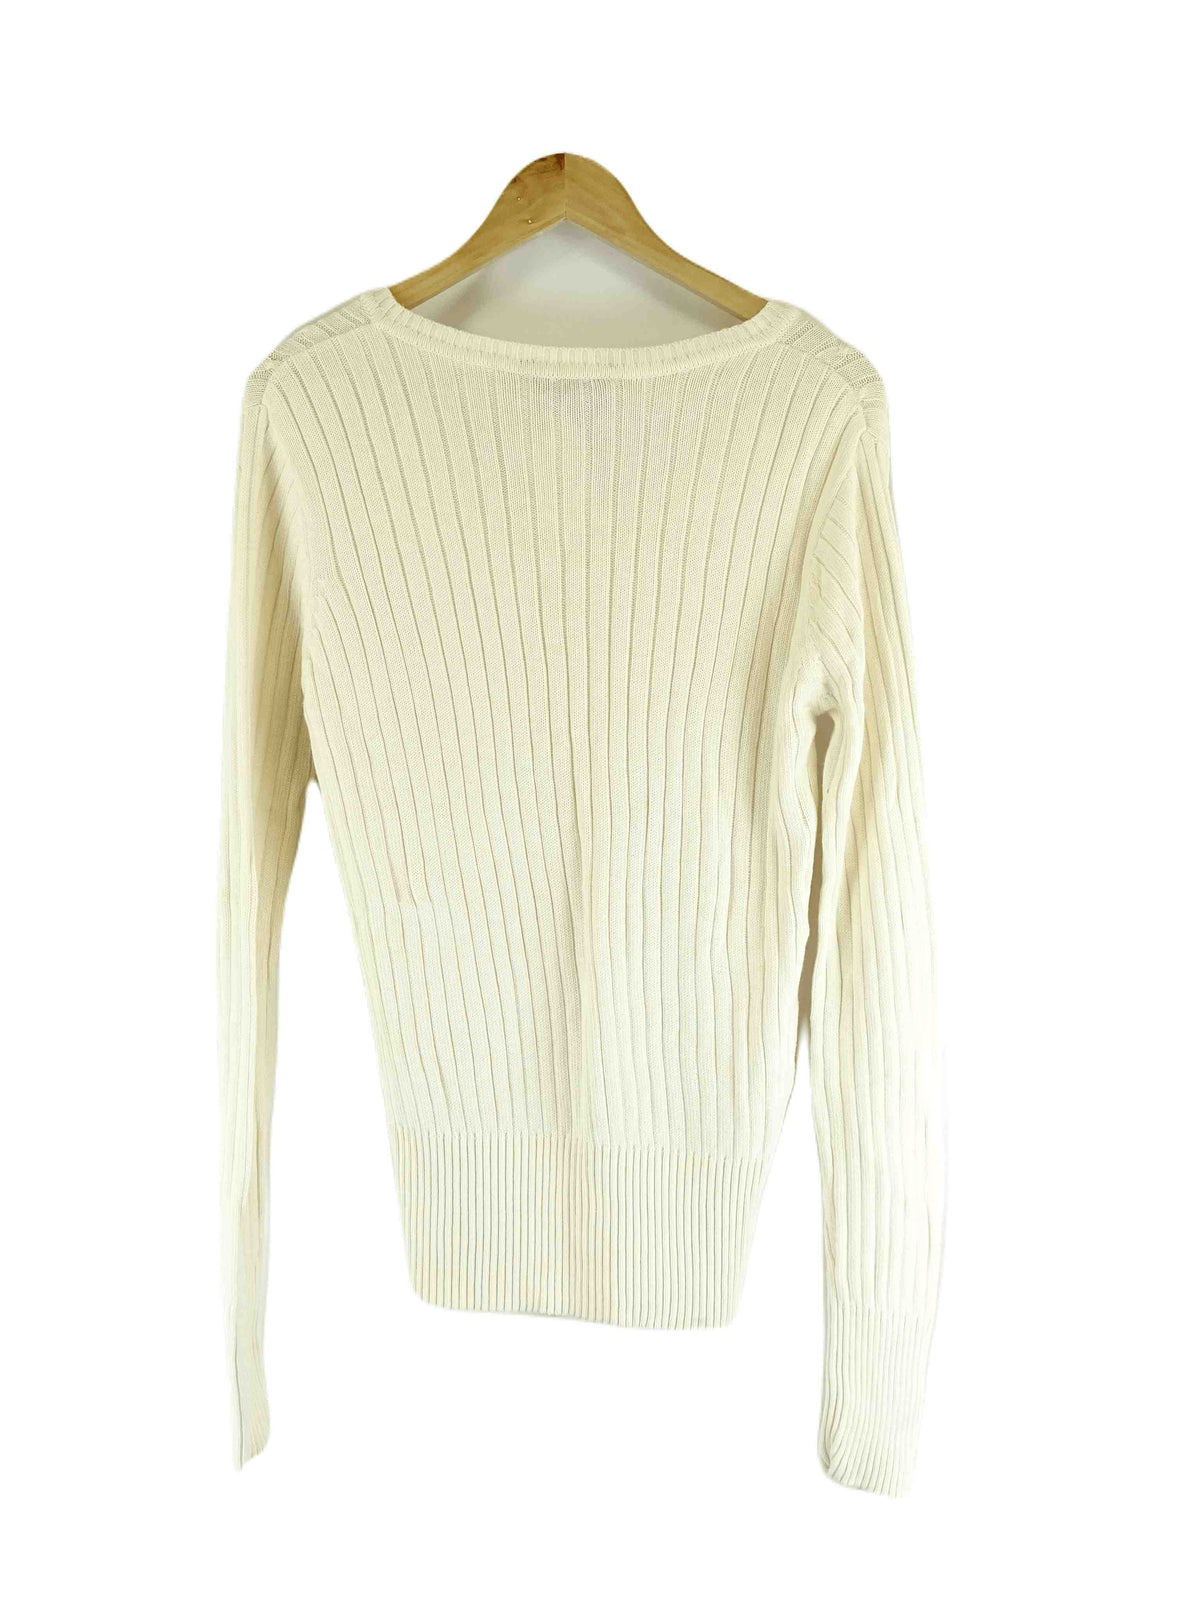 Allen Solly Cream Knit Sweater XL